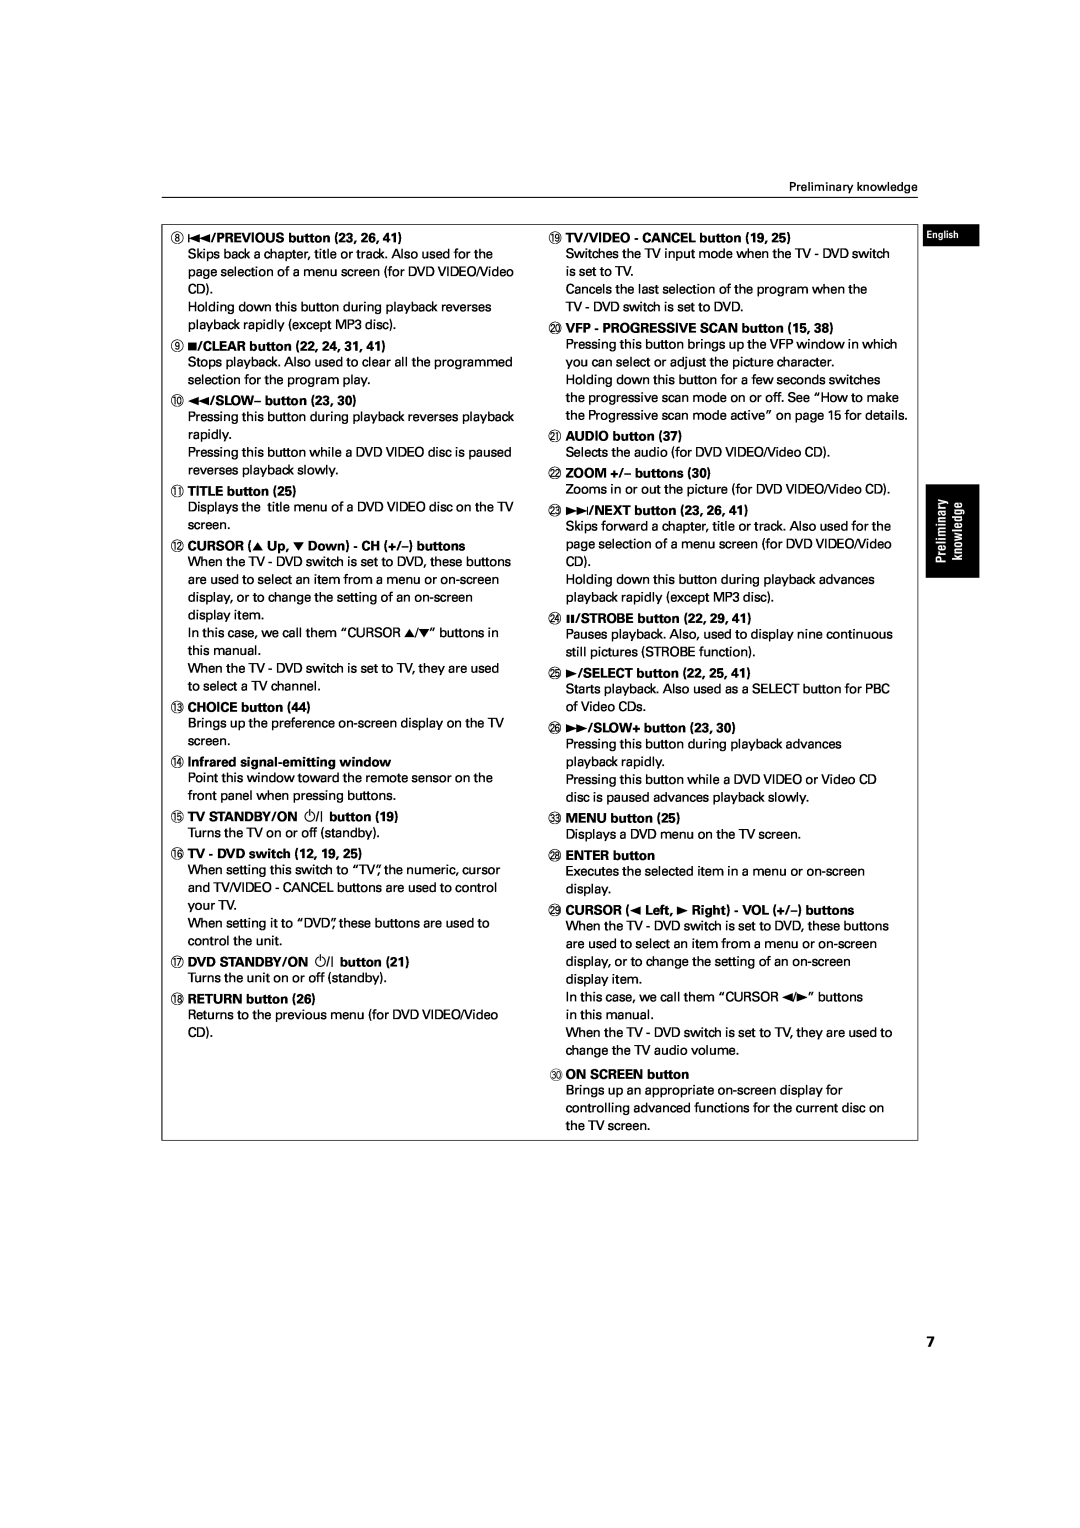 JVC XV-S60 manual 8 4/PREVIOUS button 23, 26, Preliminary, knowledge 